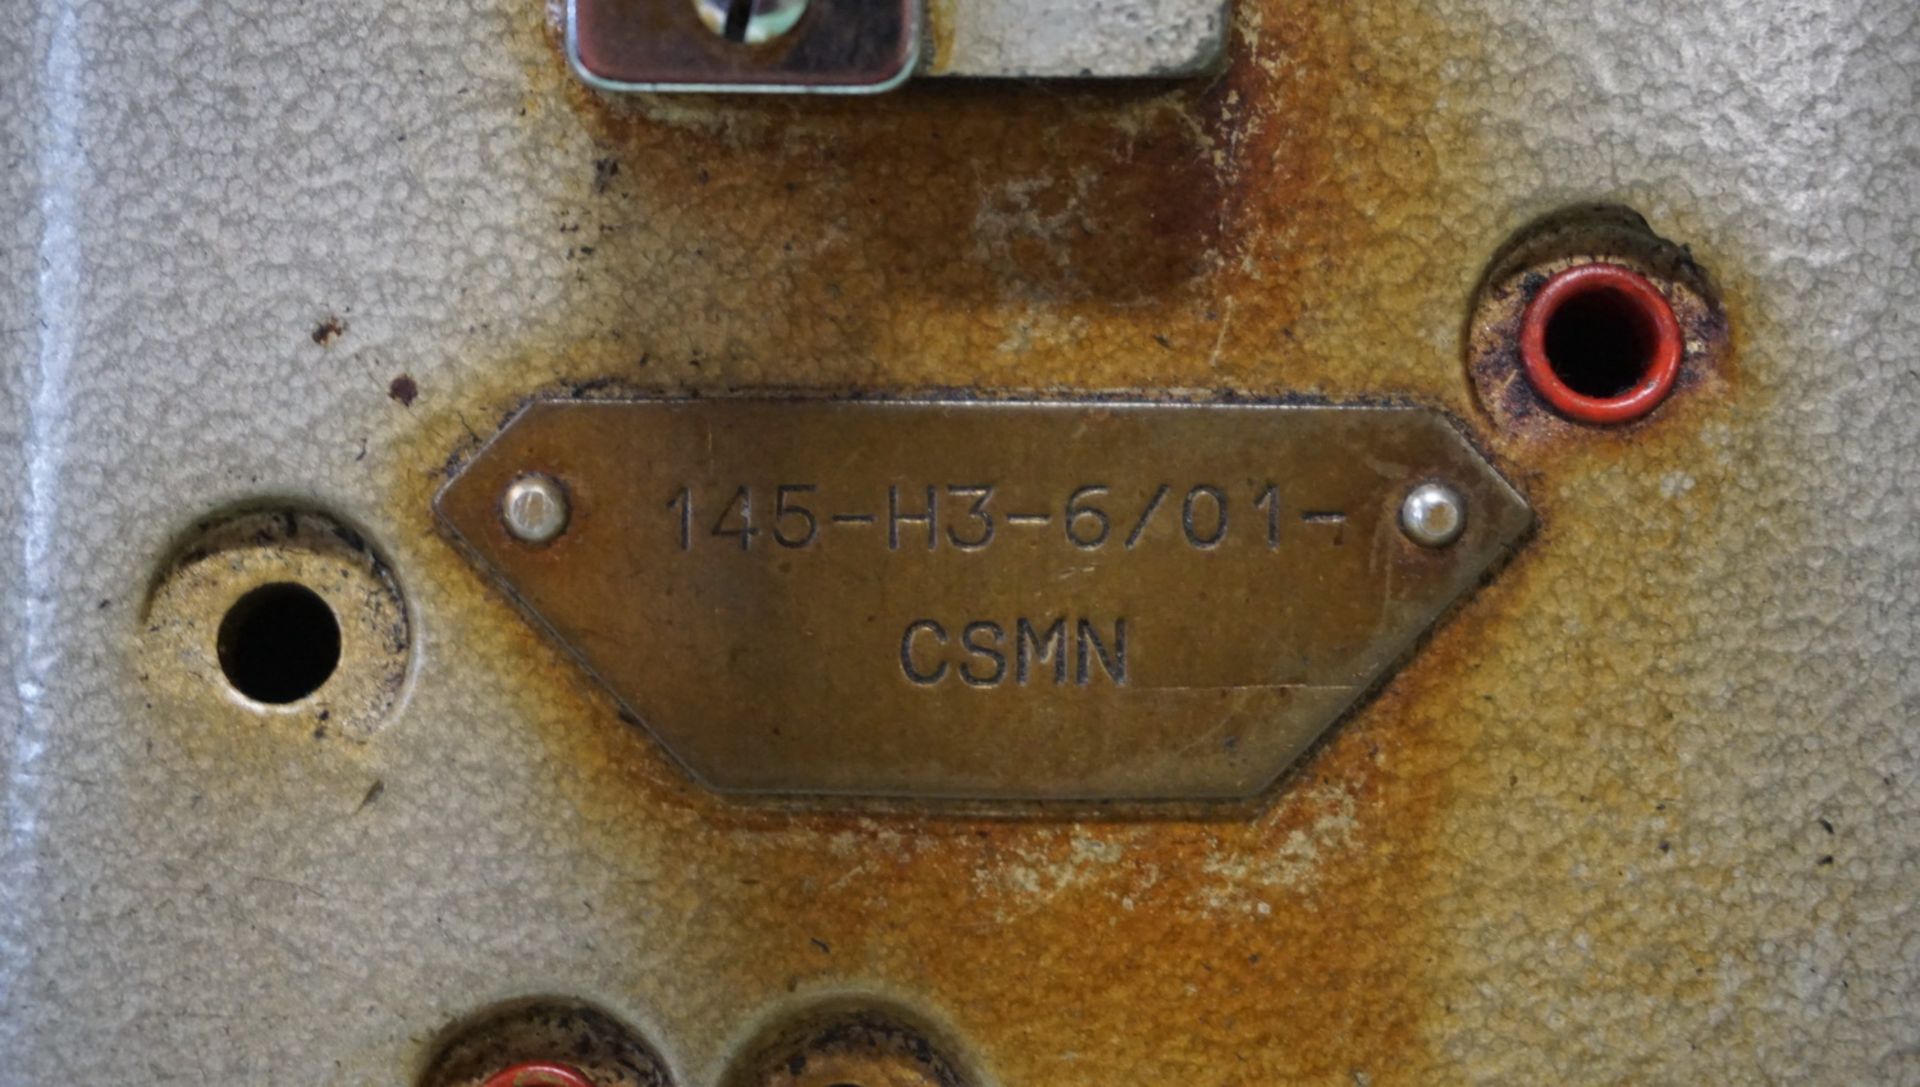 PFAFF 145-H3-6/01-CSMN SINGLE NEEDLE WALKING FOOT SEWING MACHINE (110V) - Image 4 of 5